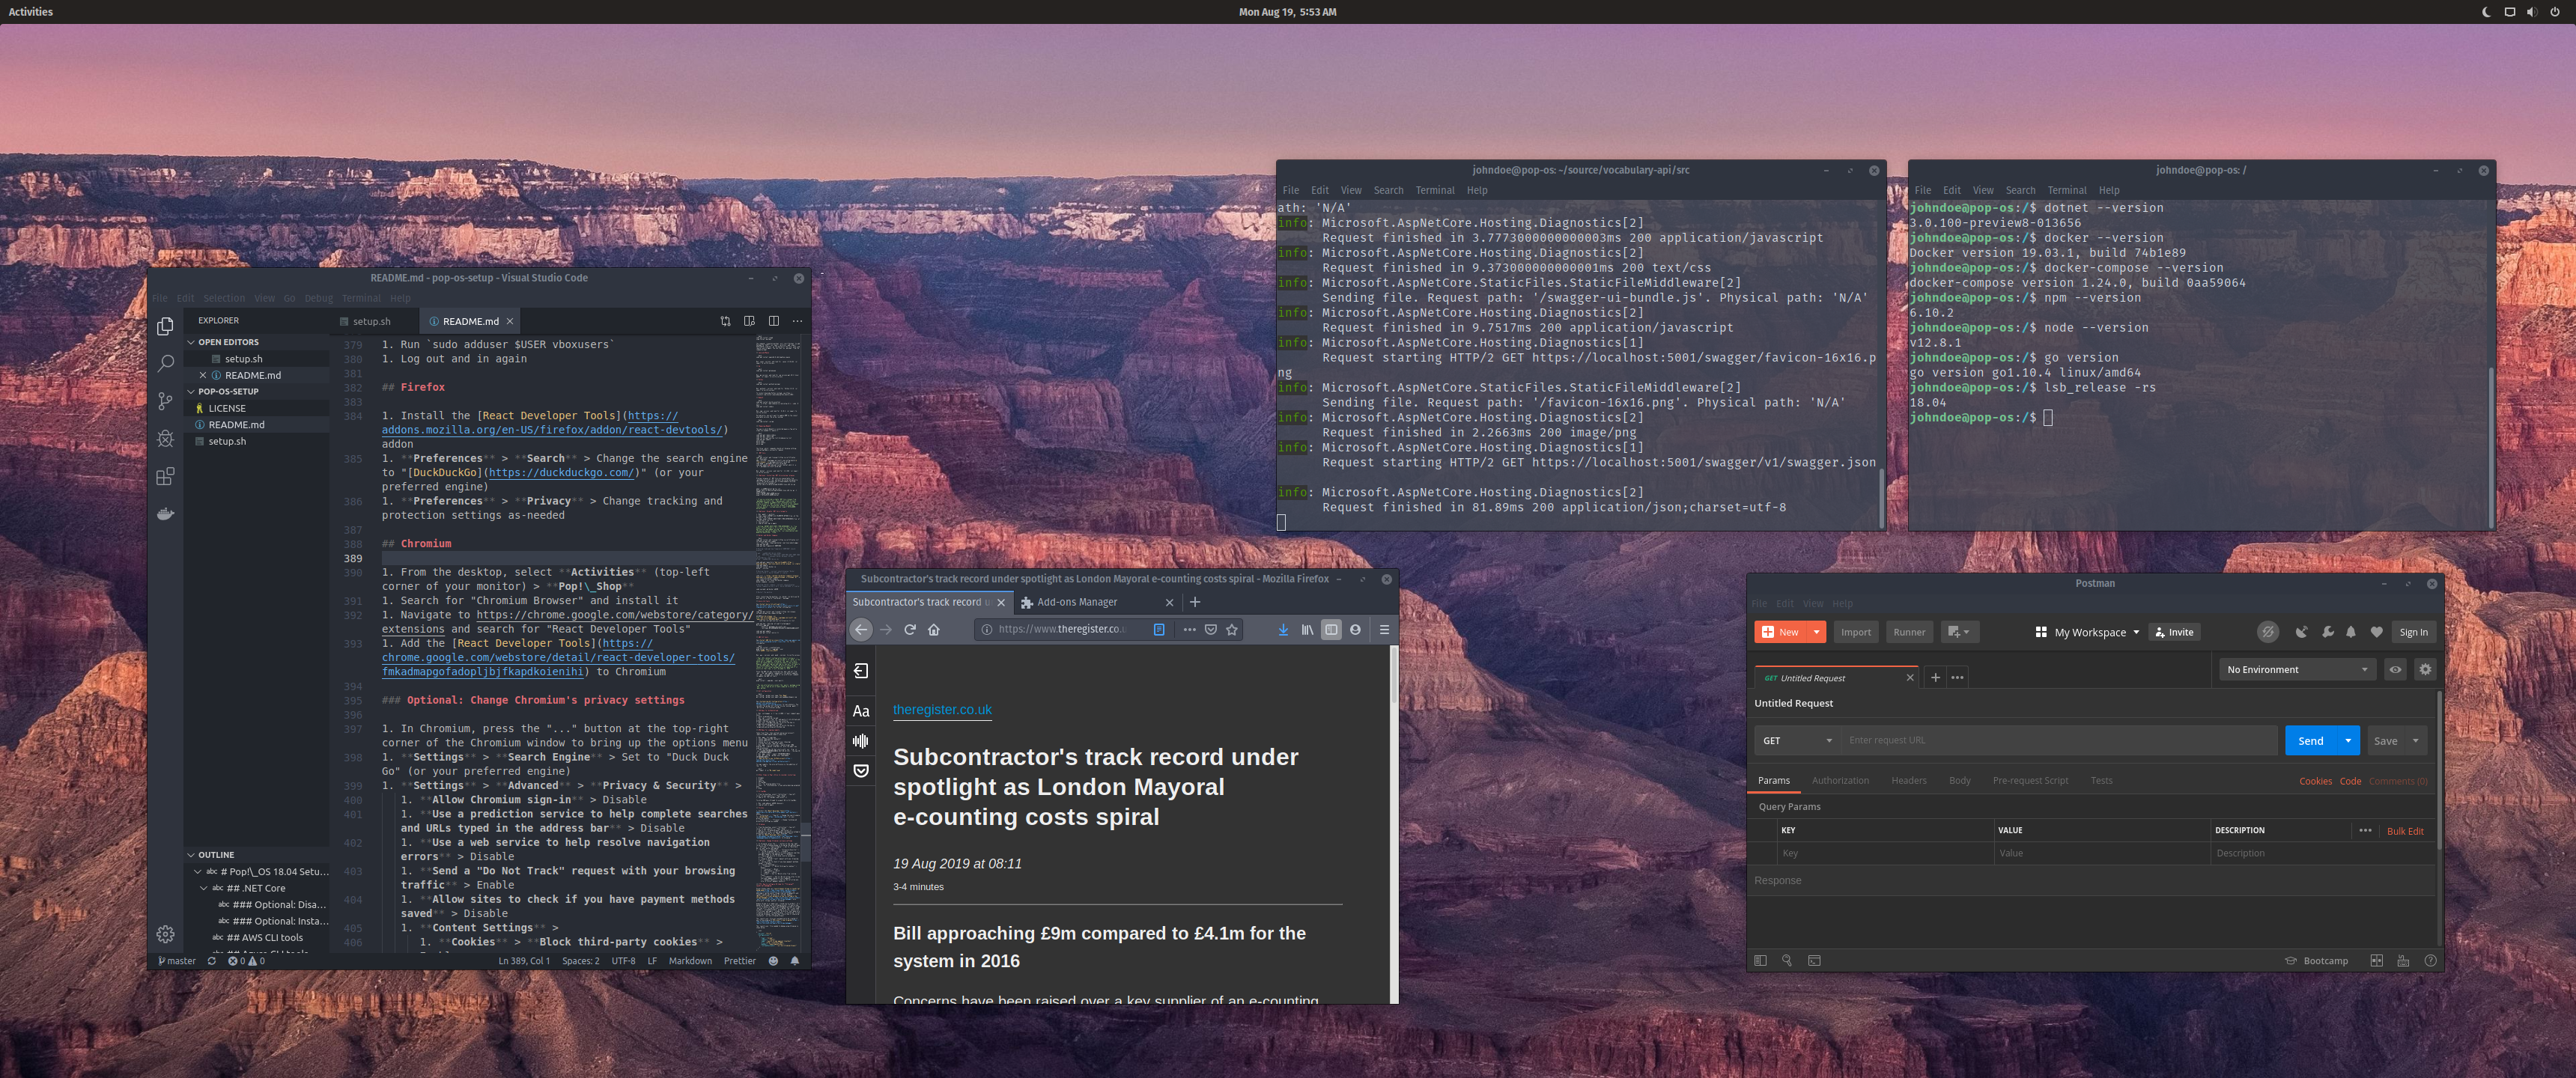 Pop!_OS desktop screenshot with various developer tools displayed and the Arc Dark theme